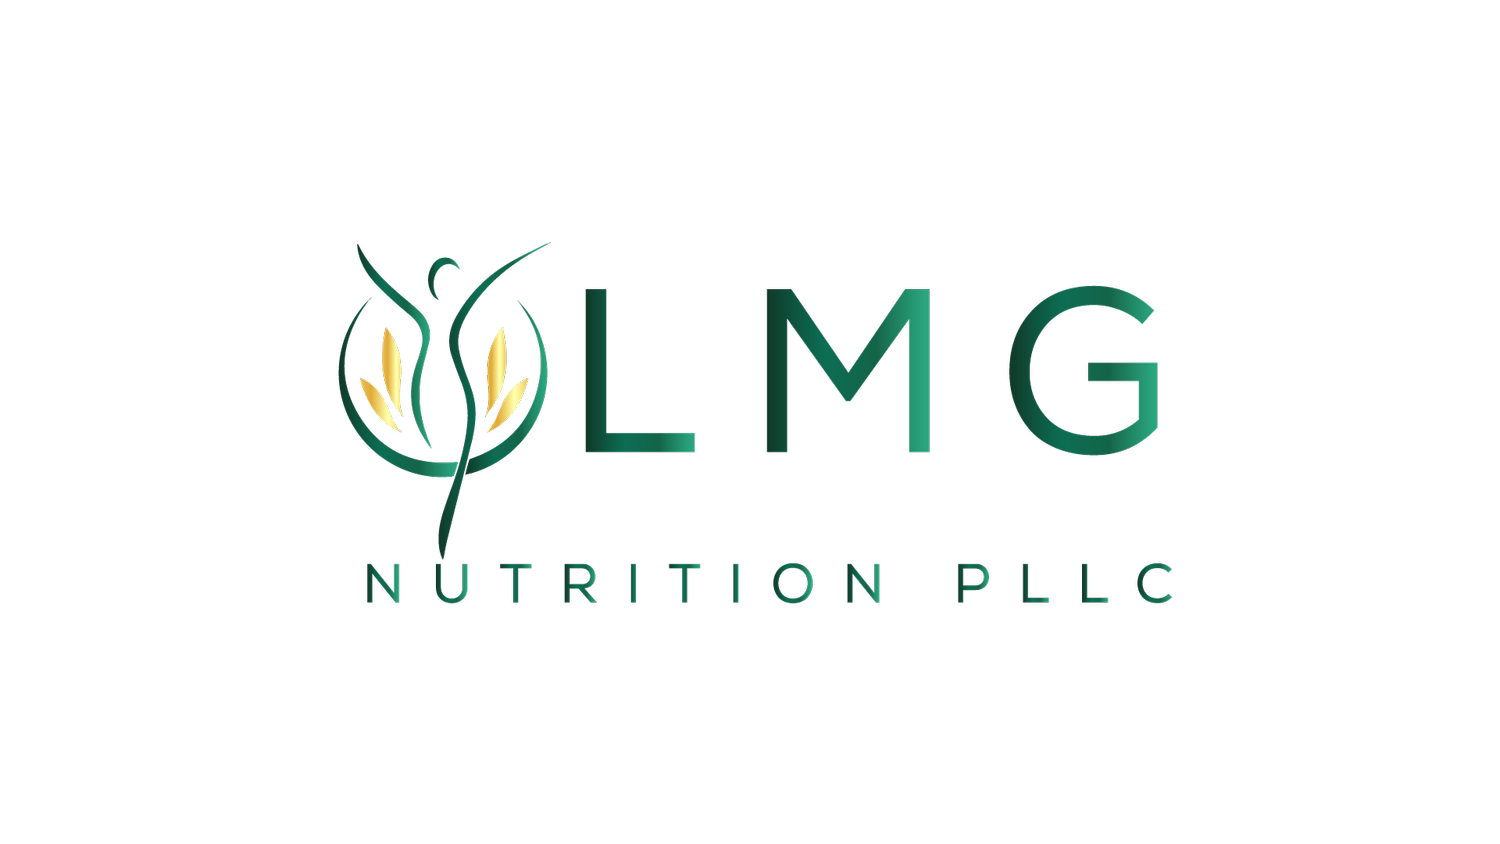 LMG Nutrition PLLC